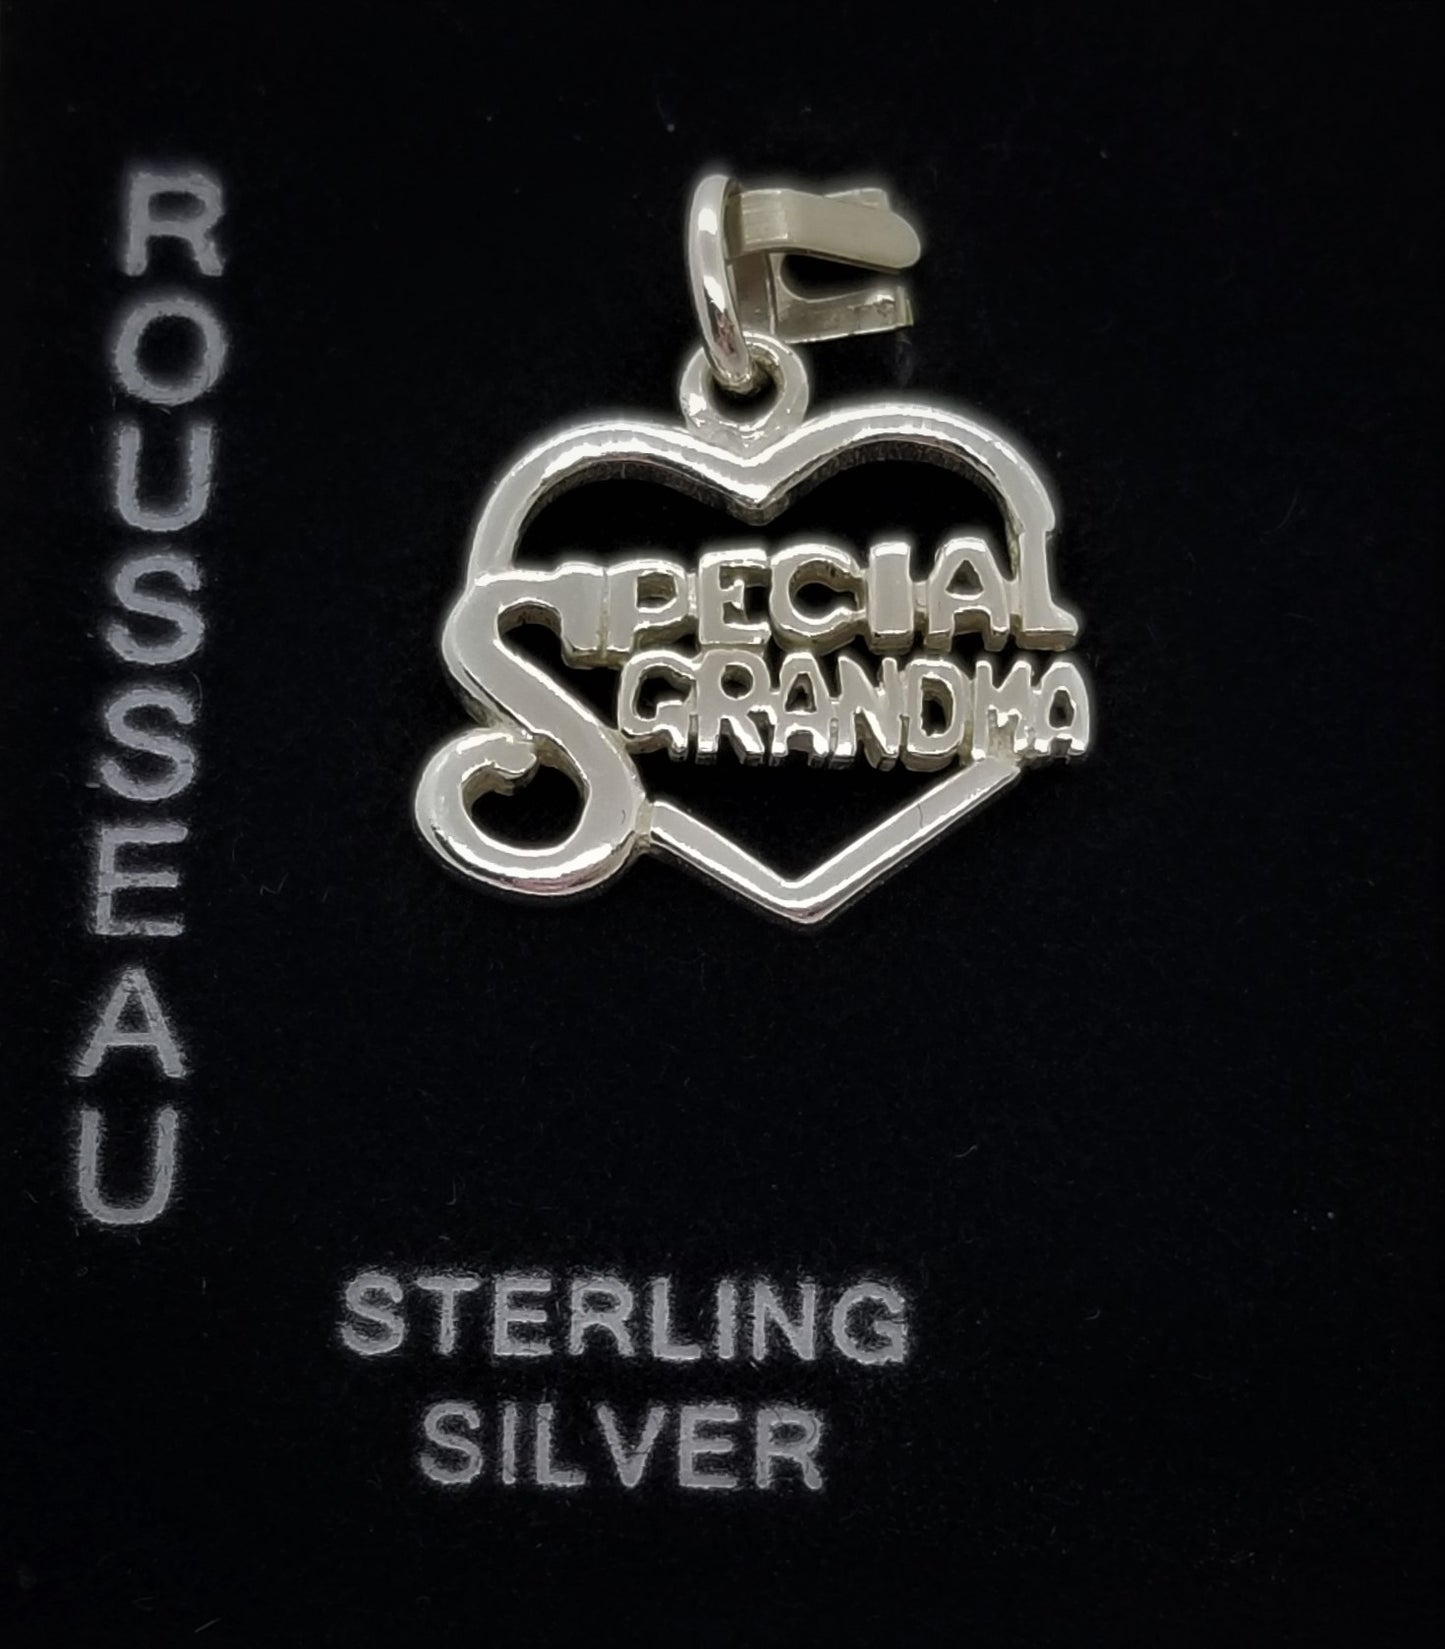 Rousseau 925 sterling silver special grandma pendant